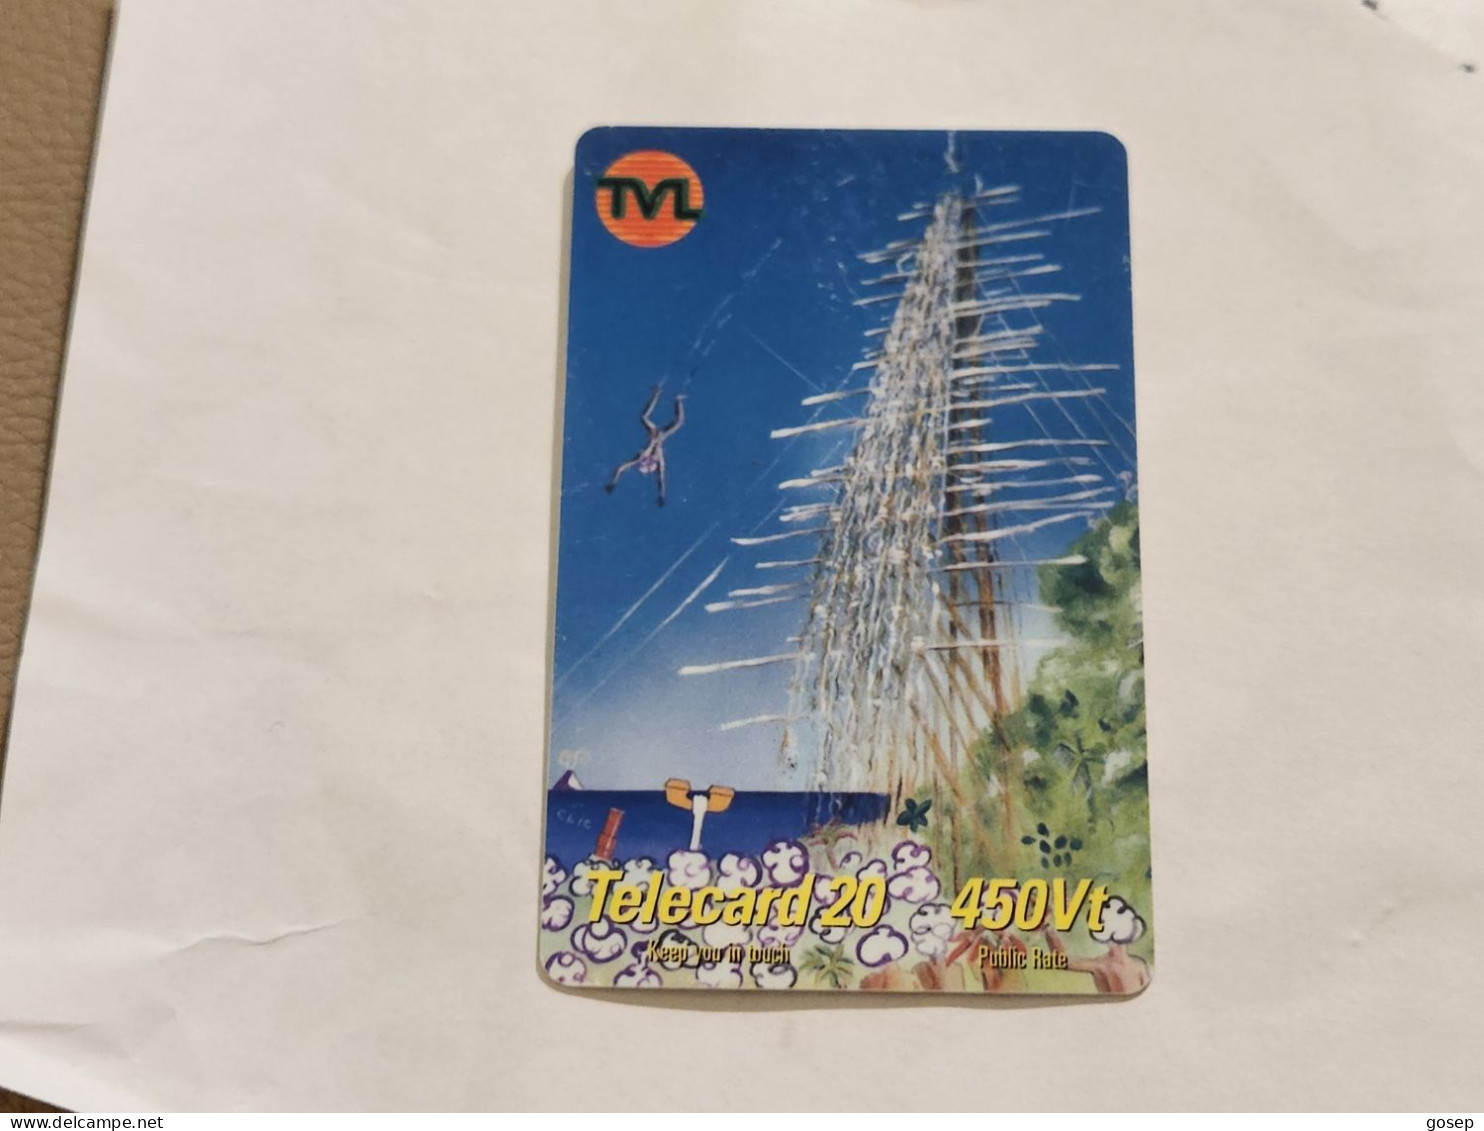 VANUATU-(VU-TVL-REM-0010-061231)-Gaul Jump(Yellow Value)-(1)-(225vt )-(6657-617-606)-used Card+1card Prepiad Free - Vanuatu